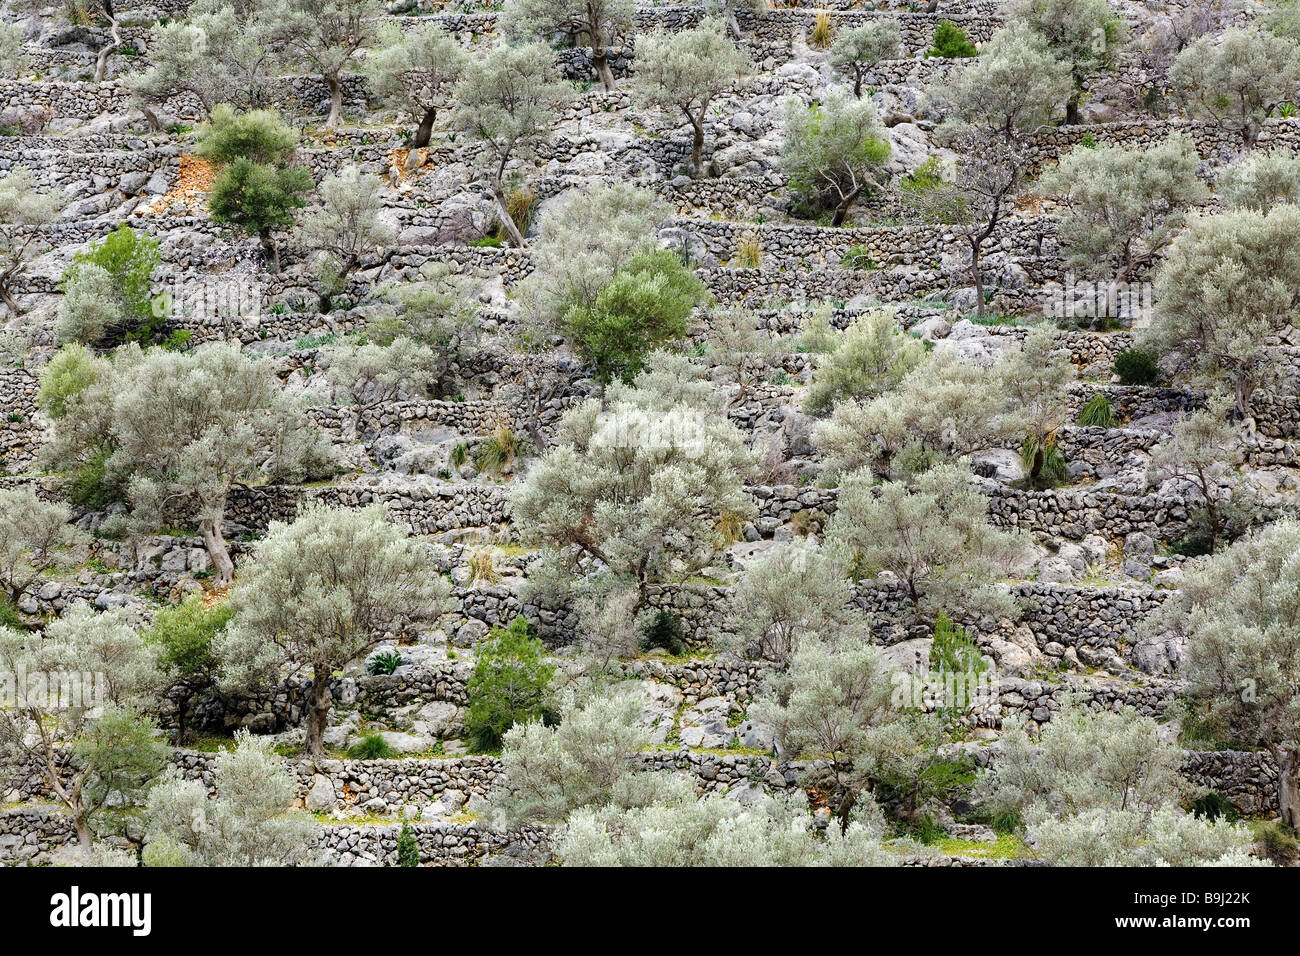 Spanien Balearen Insel Mallorca Berghang Terrasse-Feldern Olivenbäume mediterrane Terrassen Felder Hain Bäume nützlich Stockfoto